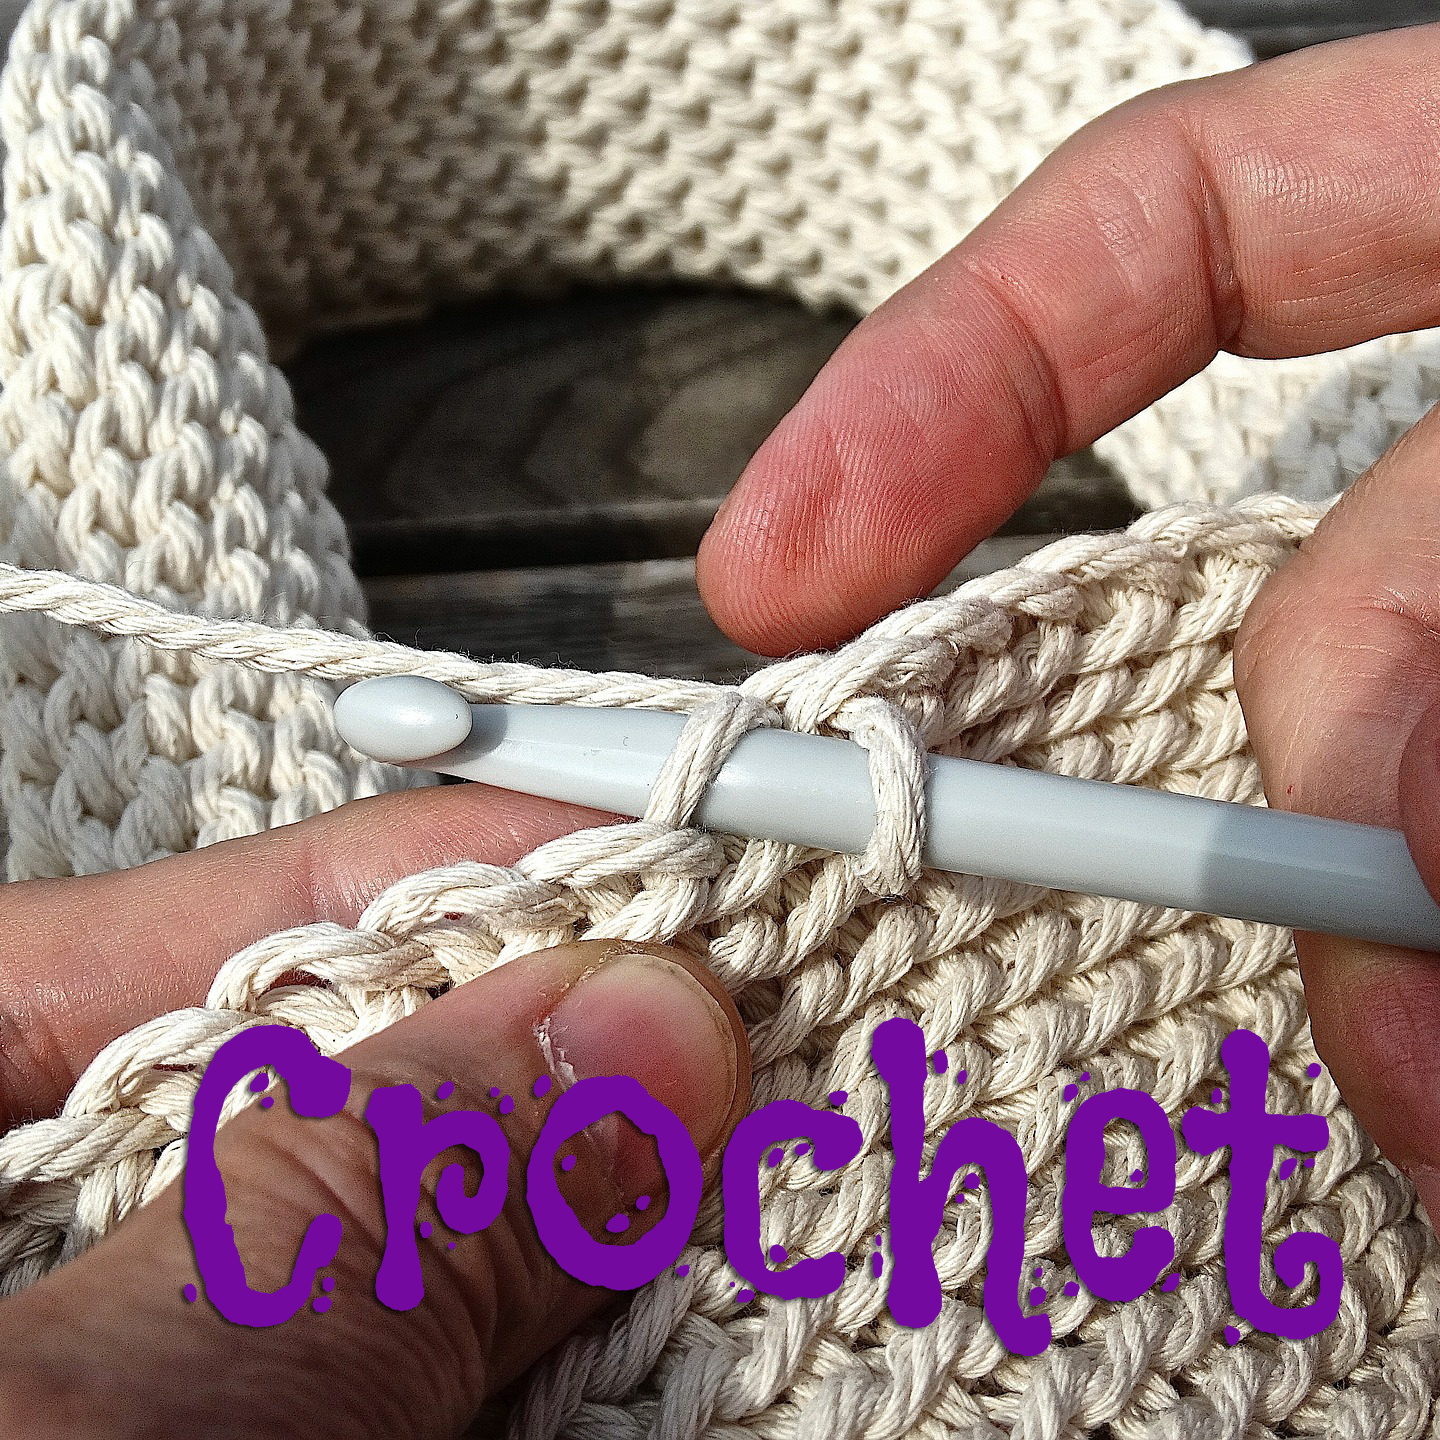 Crochet hook and yarn.